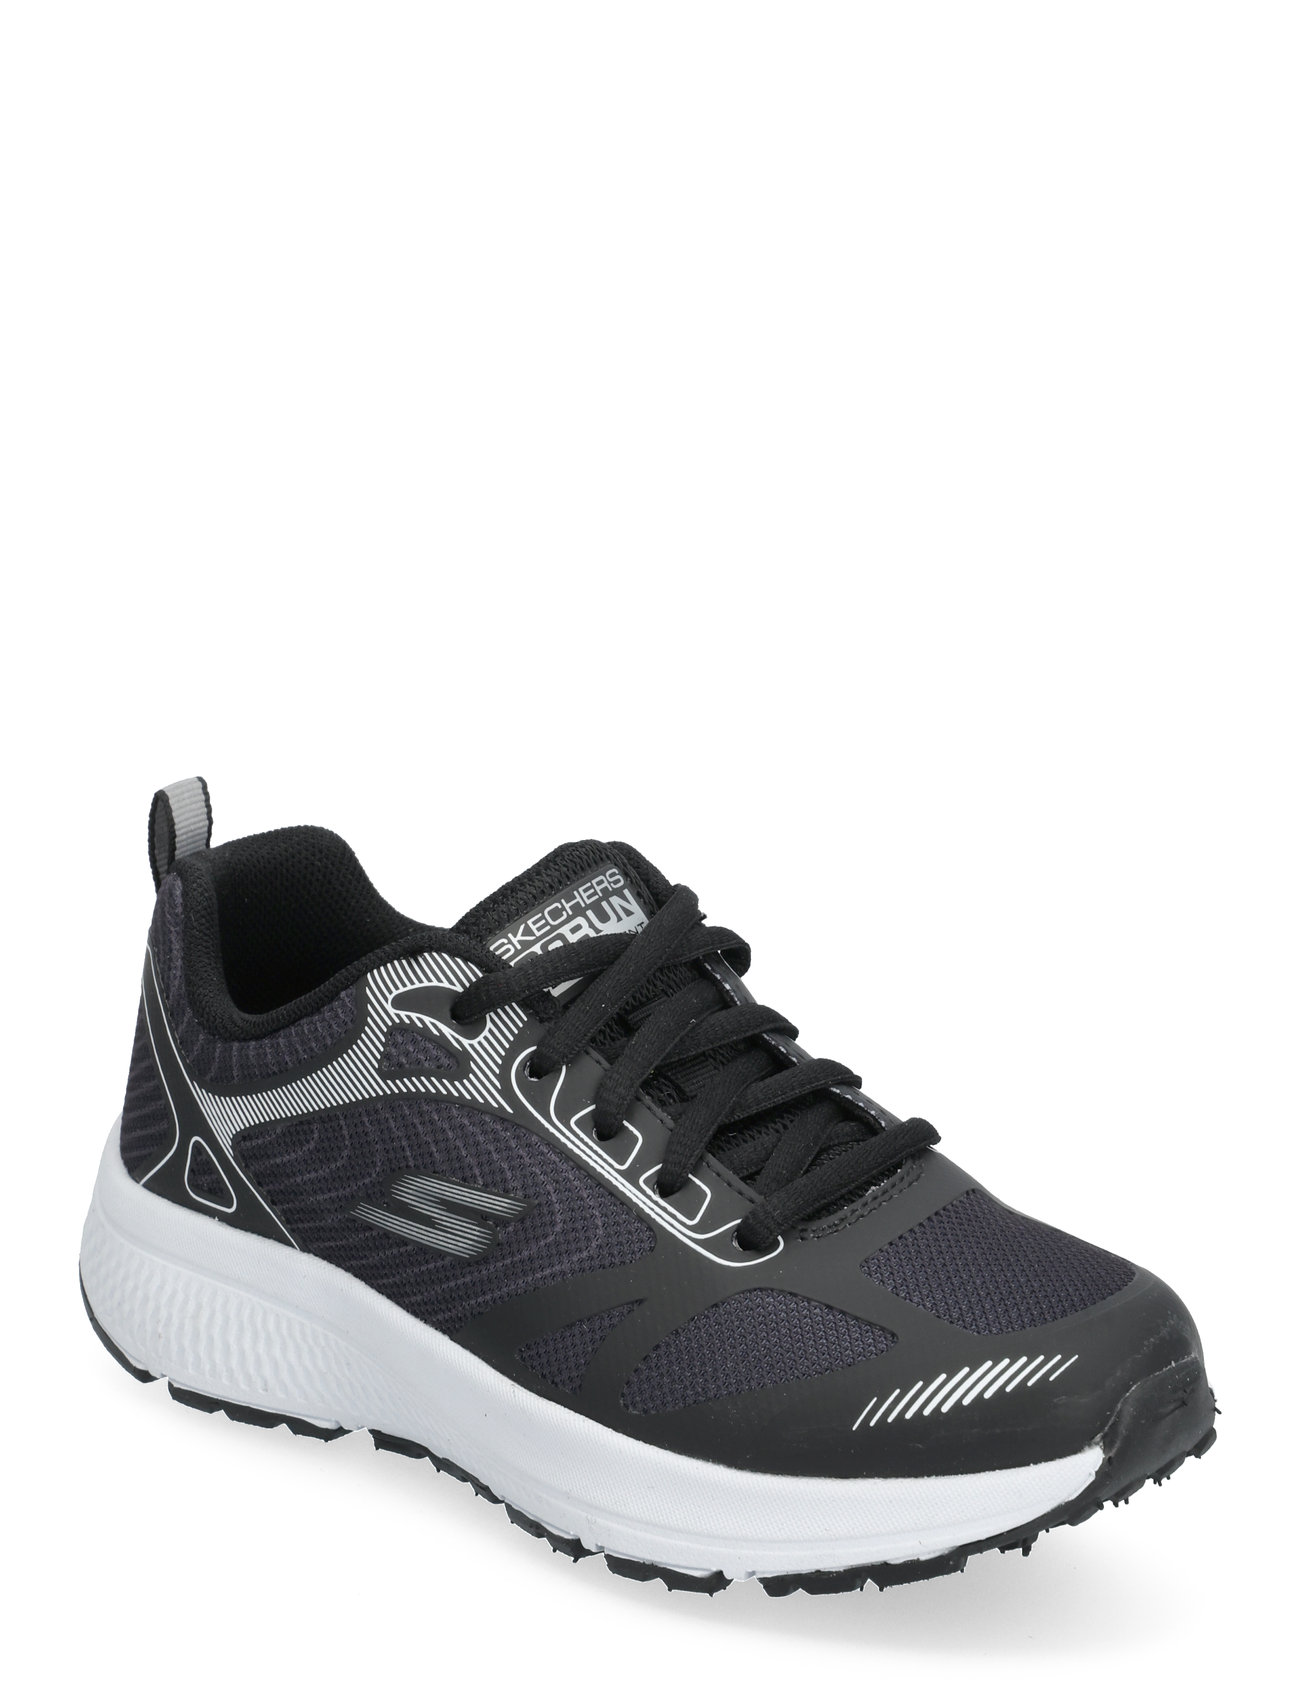 Boys Go Run Consistent - Vurlox Shoes Sports Shoes Running-training Shoes Black Skechers